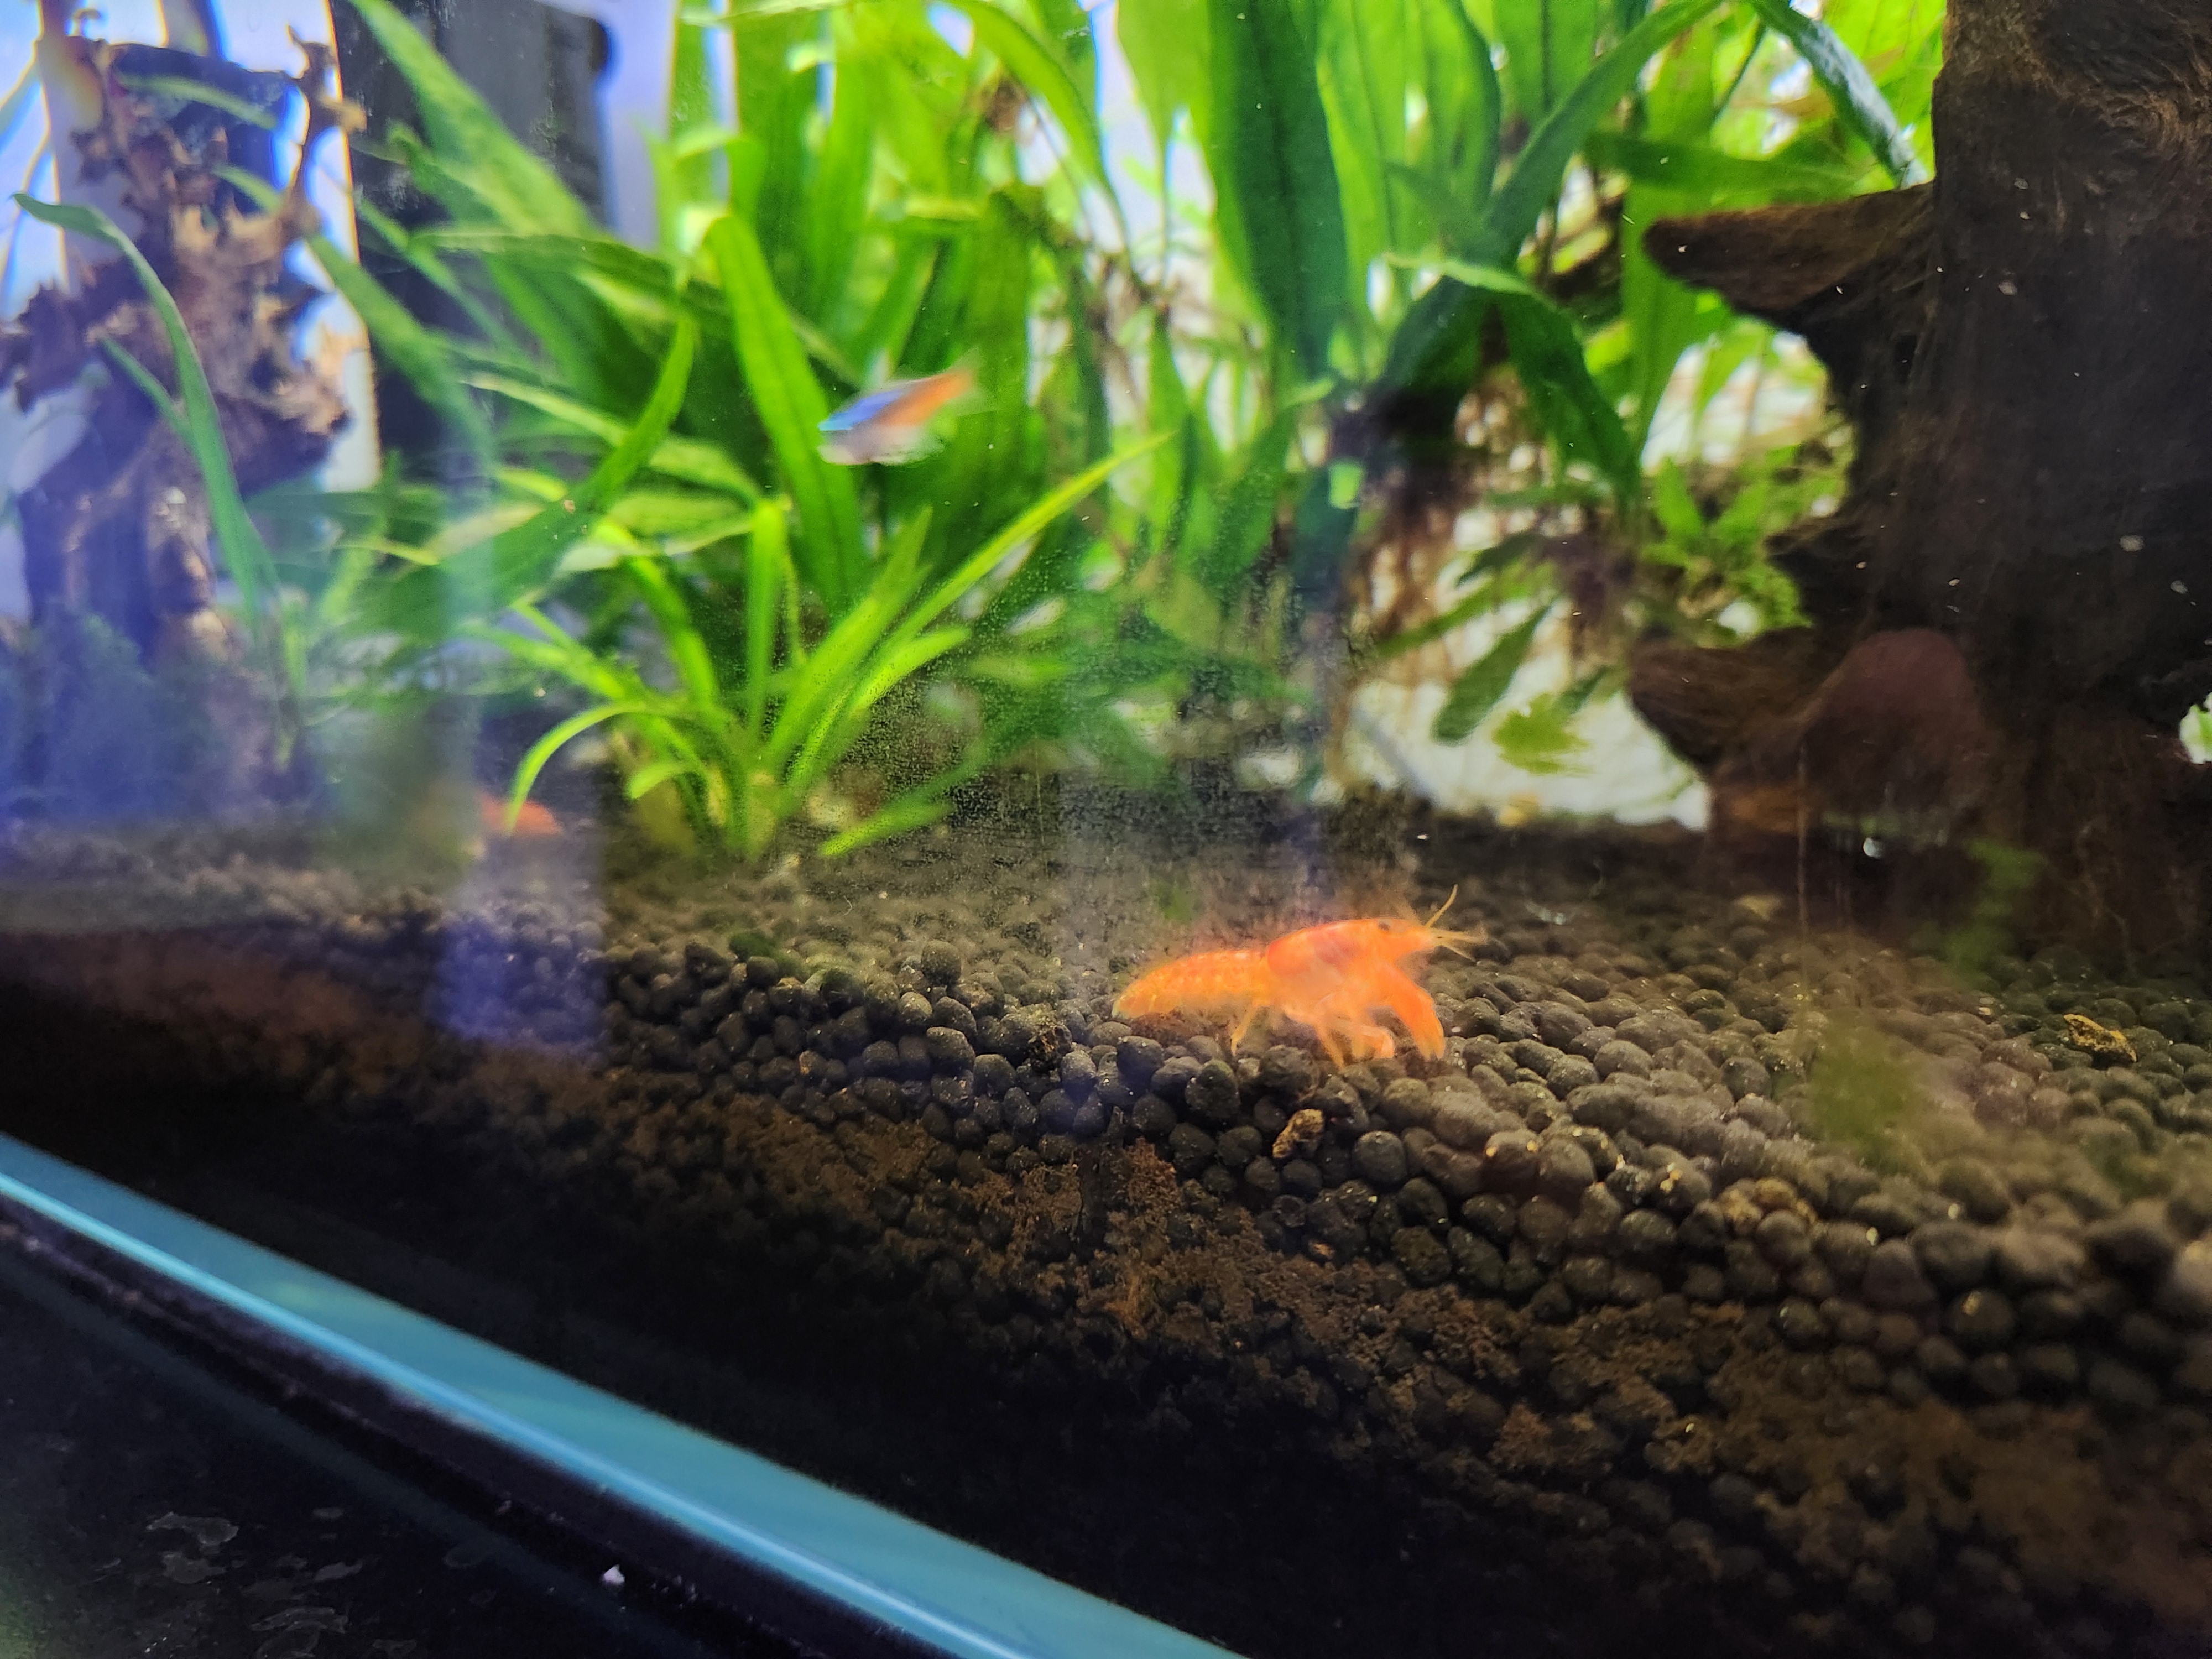 Dwarf Crayfish Live with Shrimp